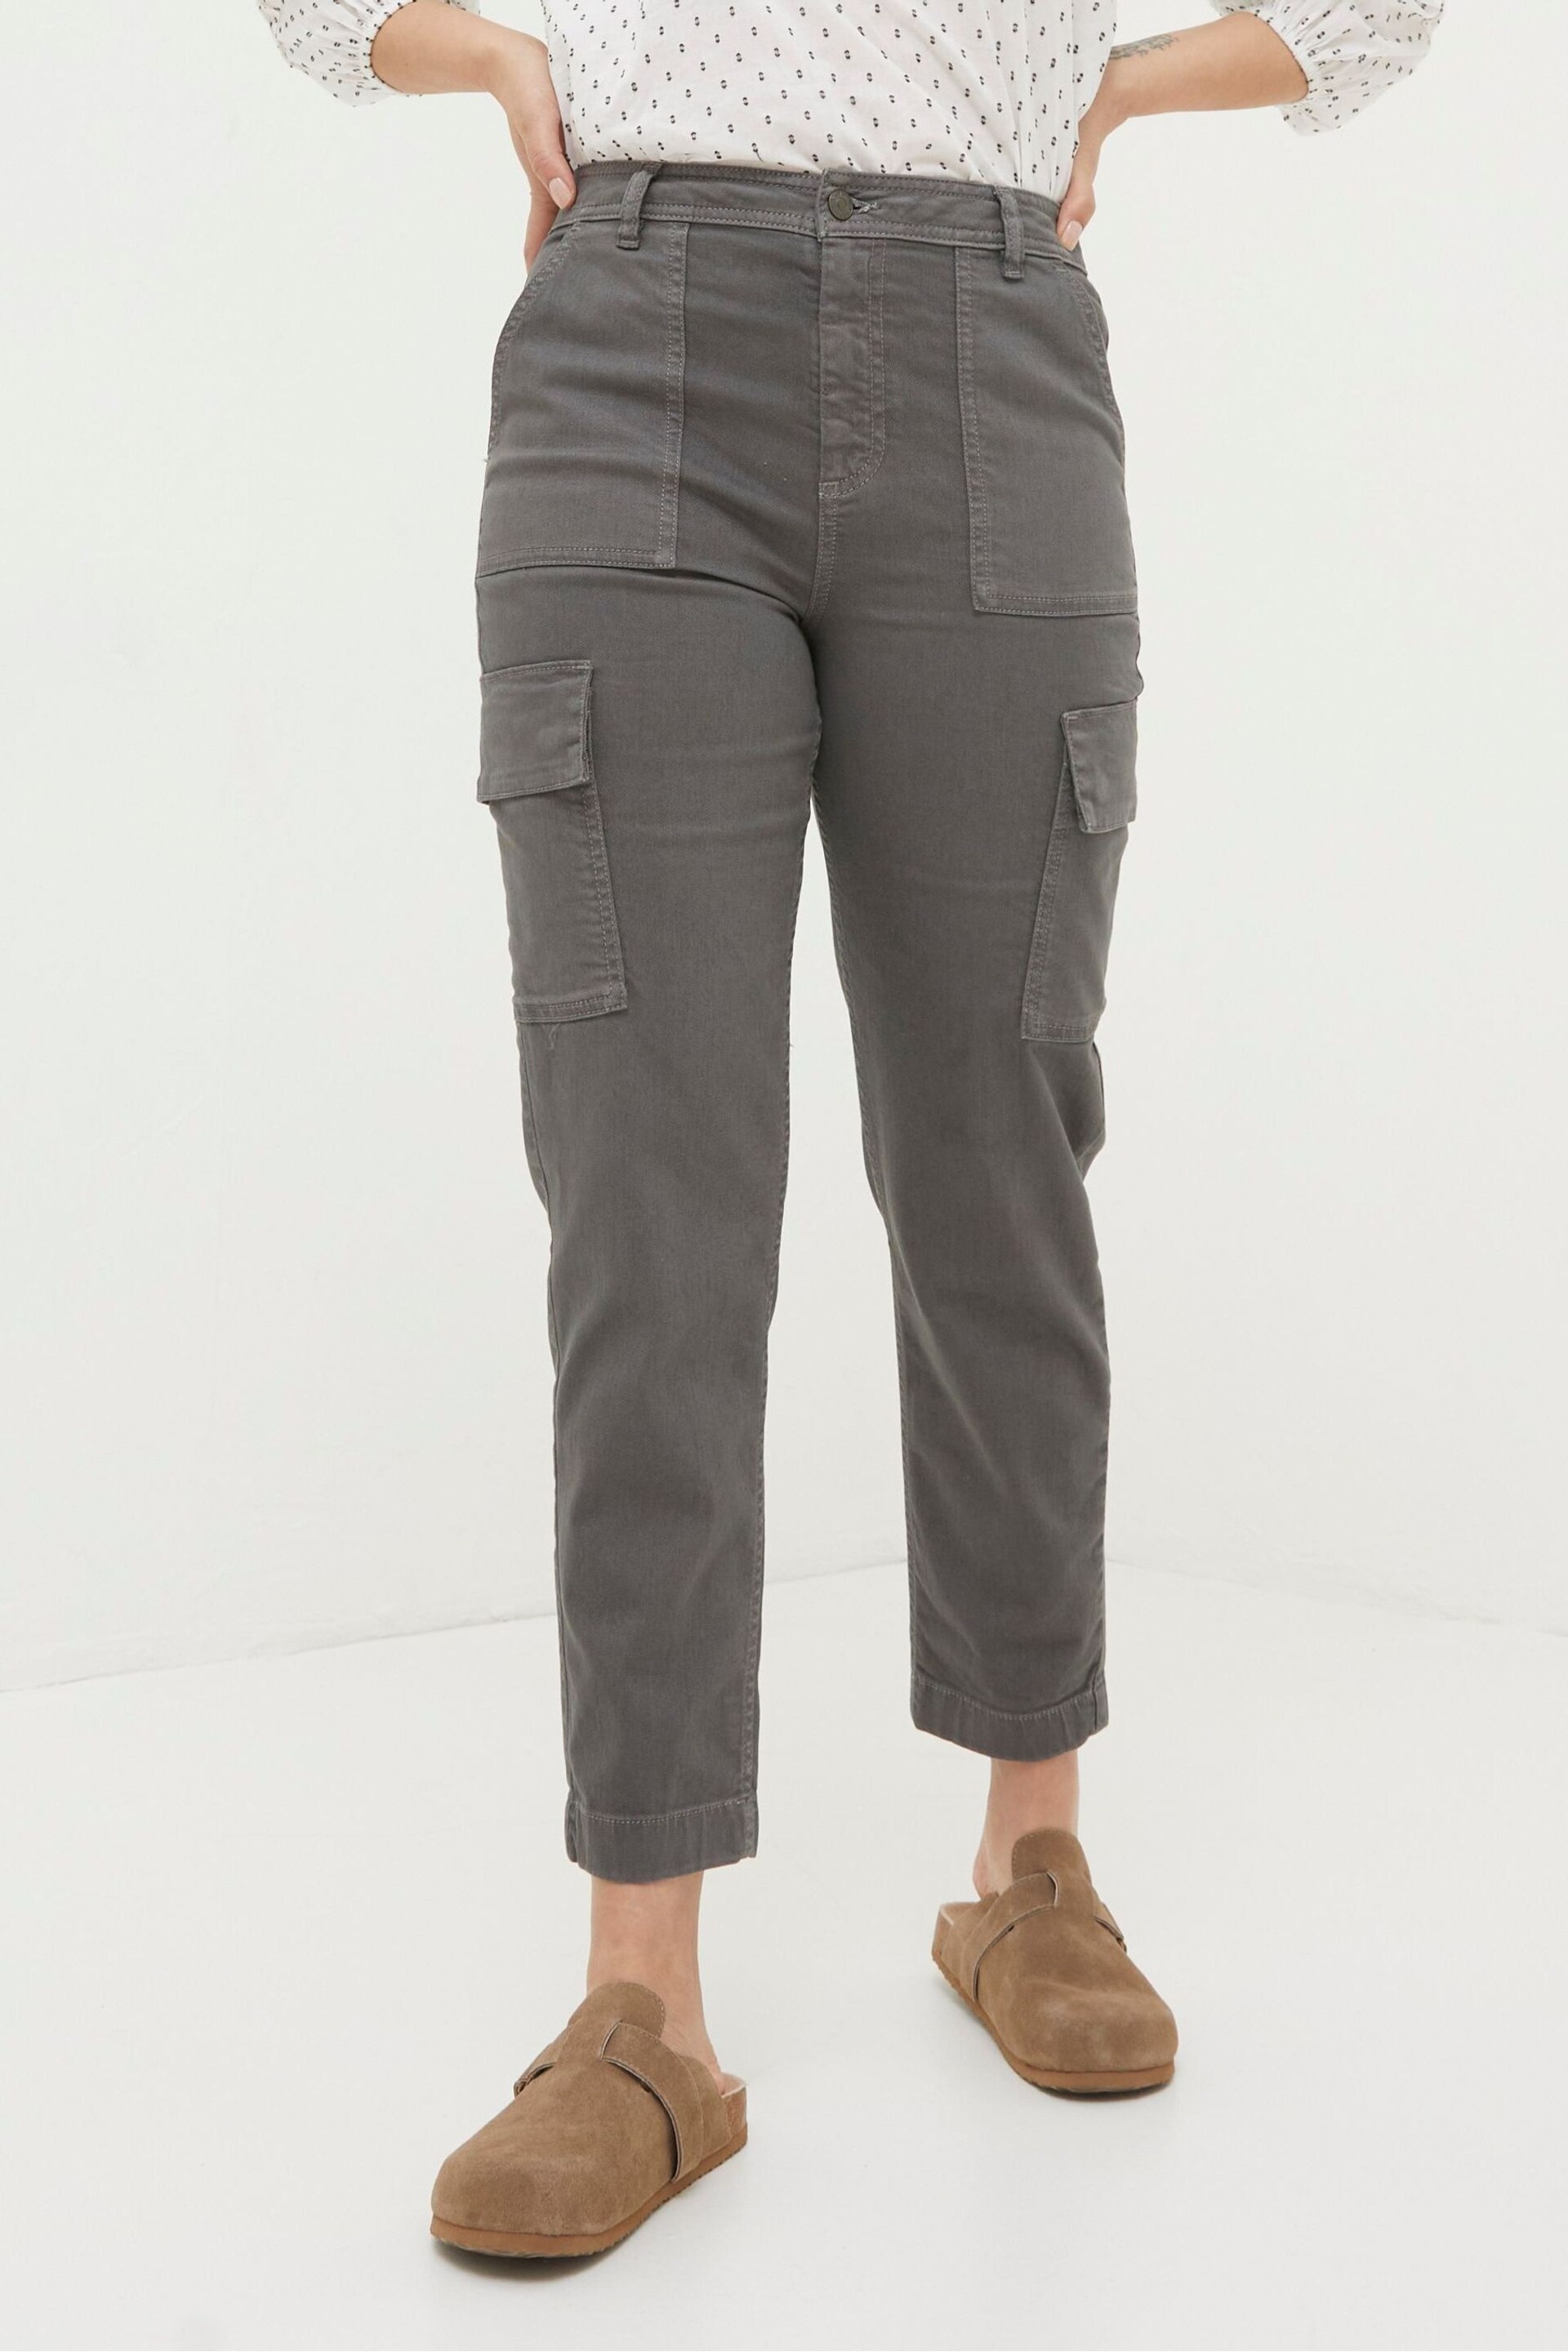 FatFace Grey Aspen Cargo Chino Trousers - Image 1 of 5